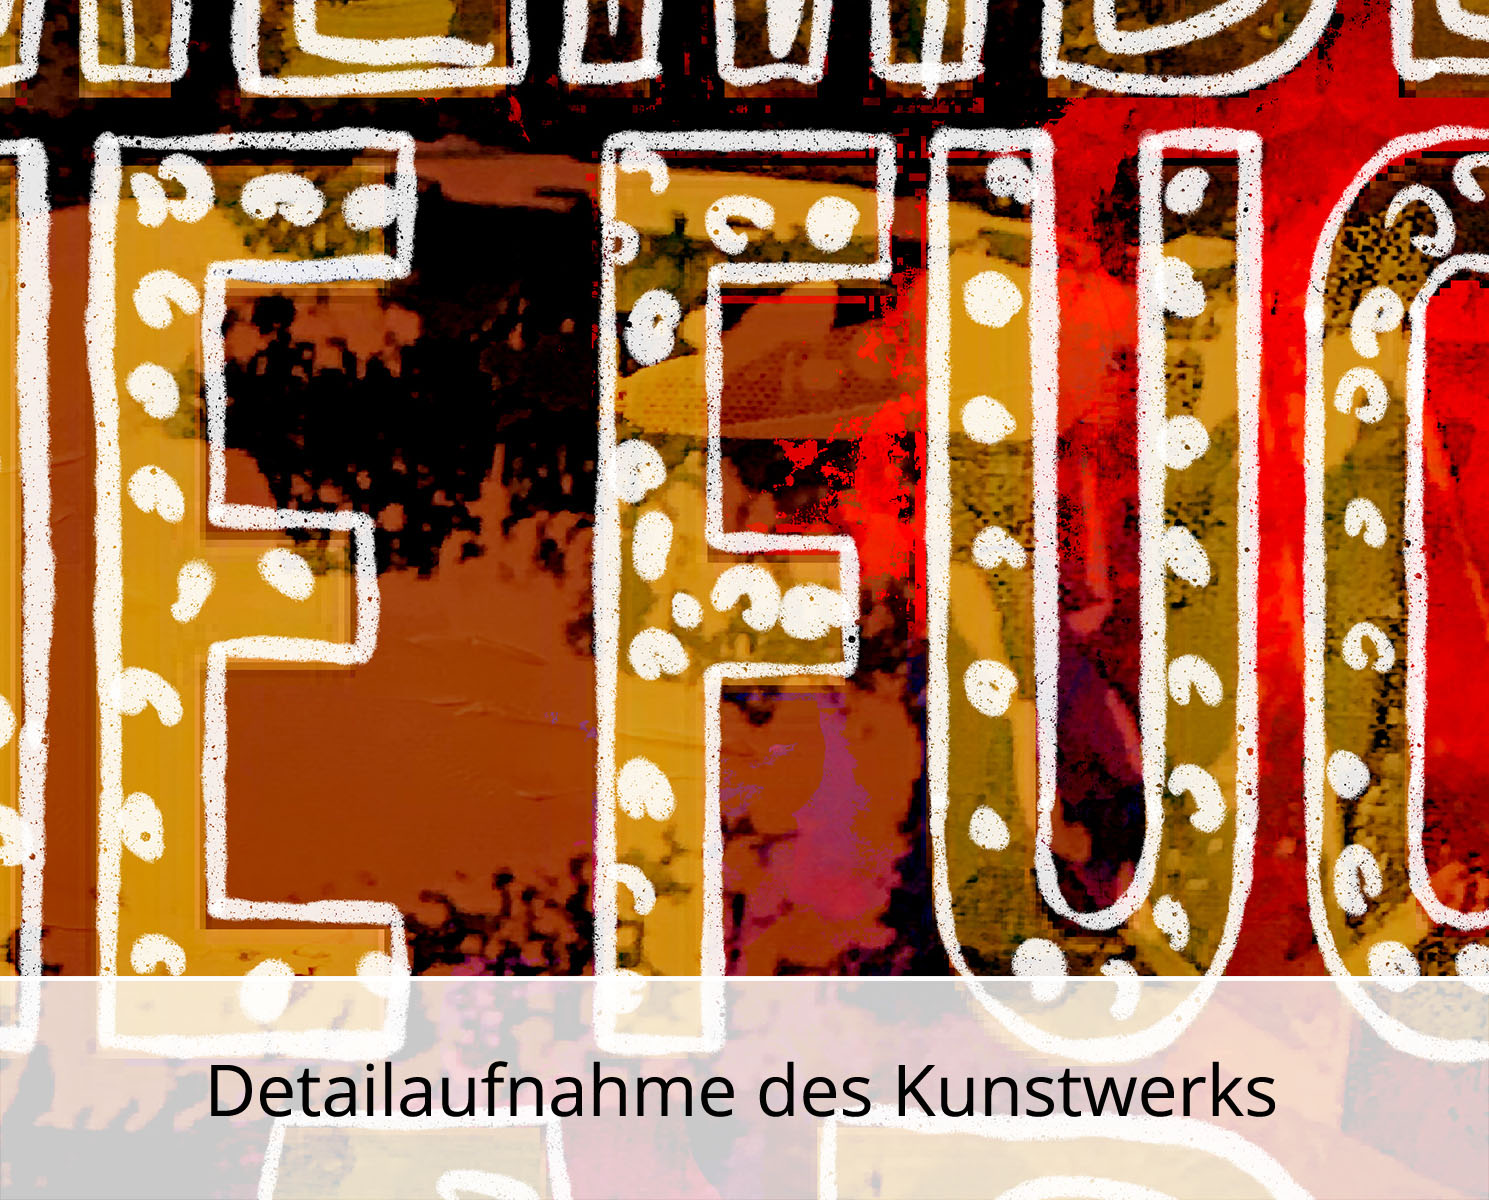 H. Mühlbauer-Gardemin: "Typo III, Lebensweisheit", Moderne Pop Art, Original/serielles Unikat